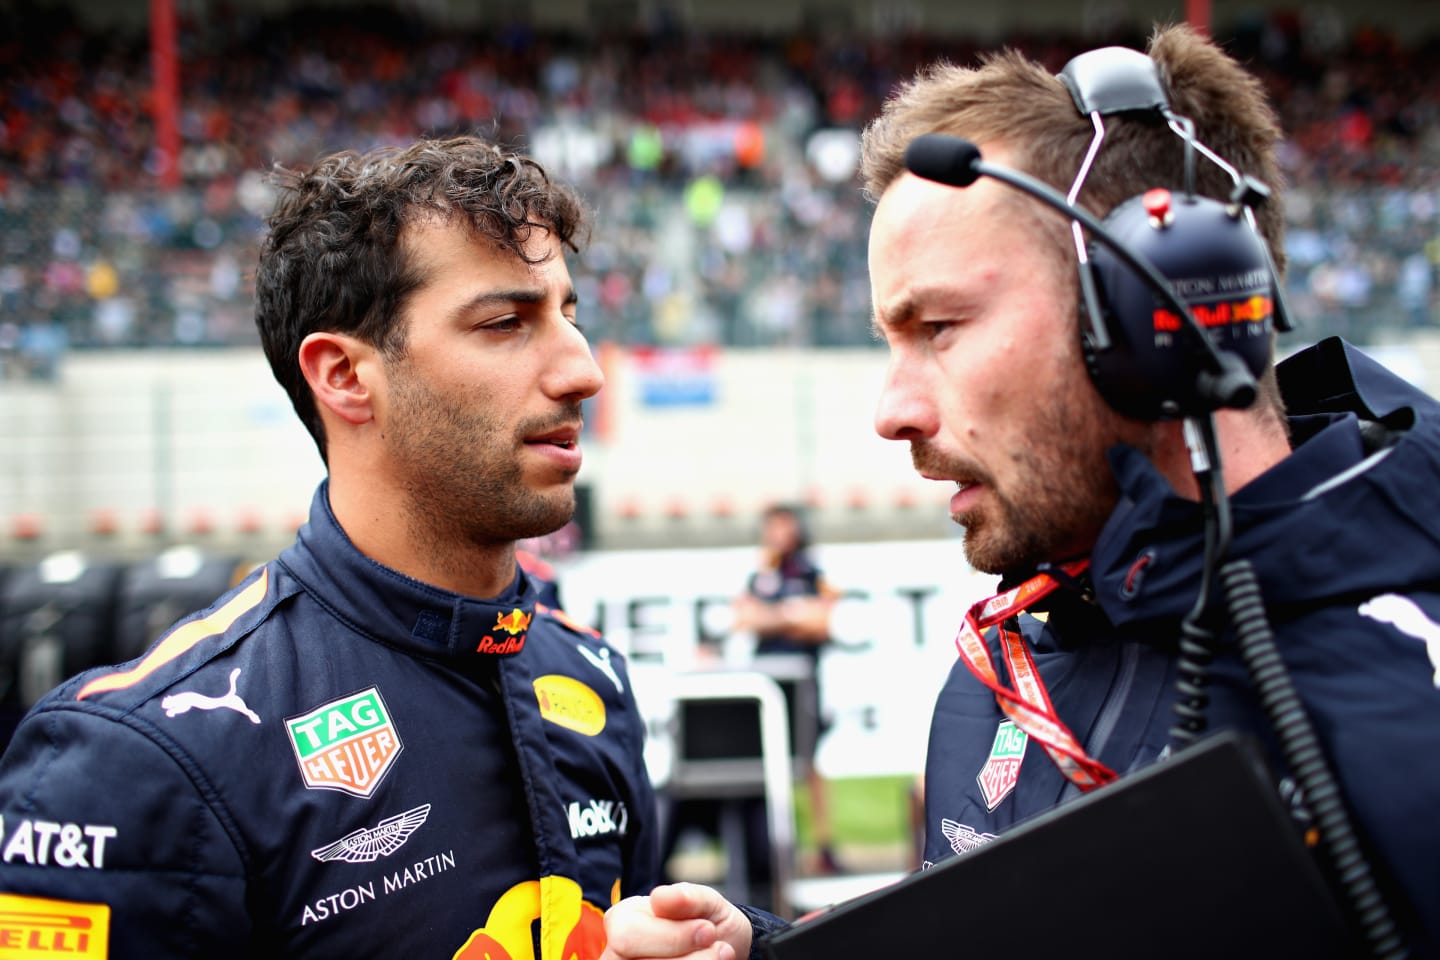 SPA, BELGIUM - AUGUST 26: Daniel Ricciardo of Australia and Red Bull Racing talks with race